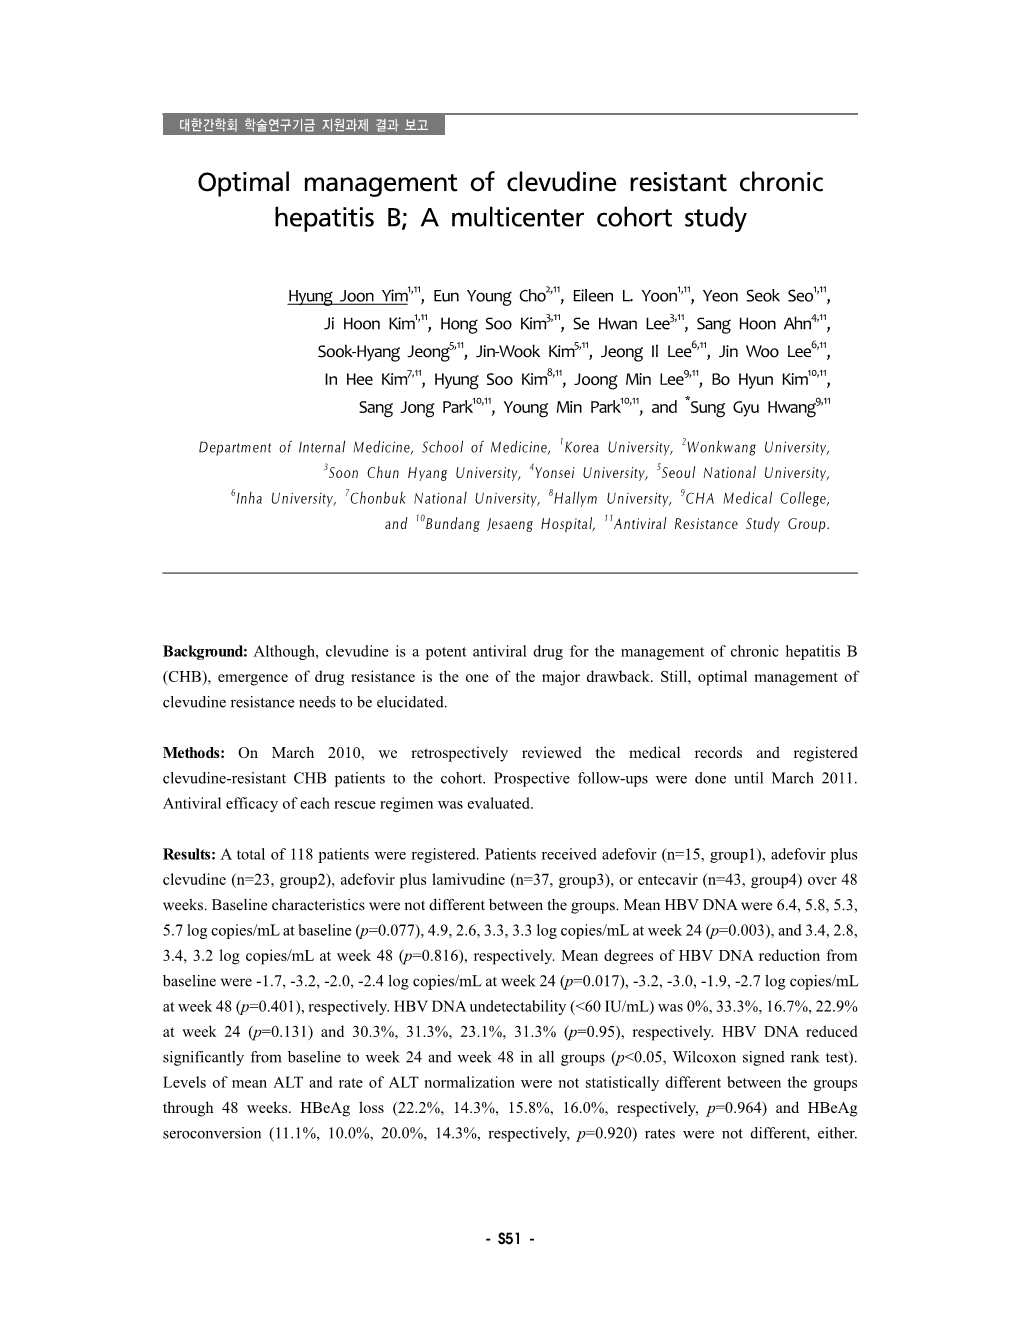 Optimal Management of Clevudine Resistant Chronic Hepatitis B; a Multicenter Cohort Study